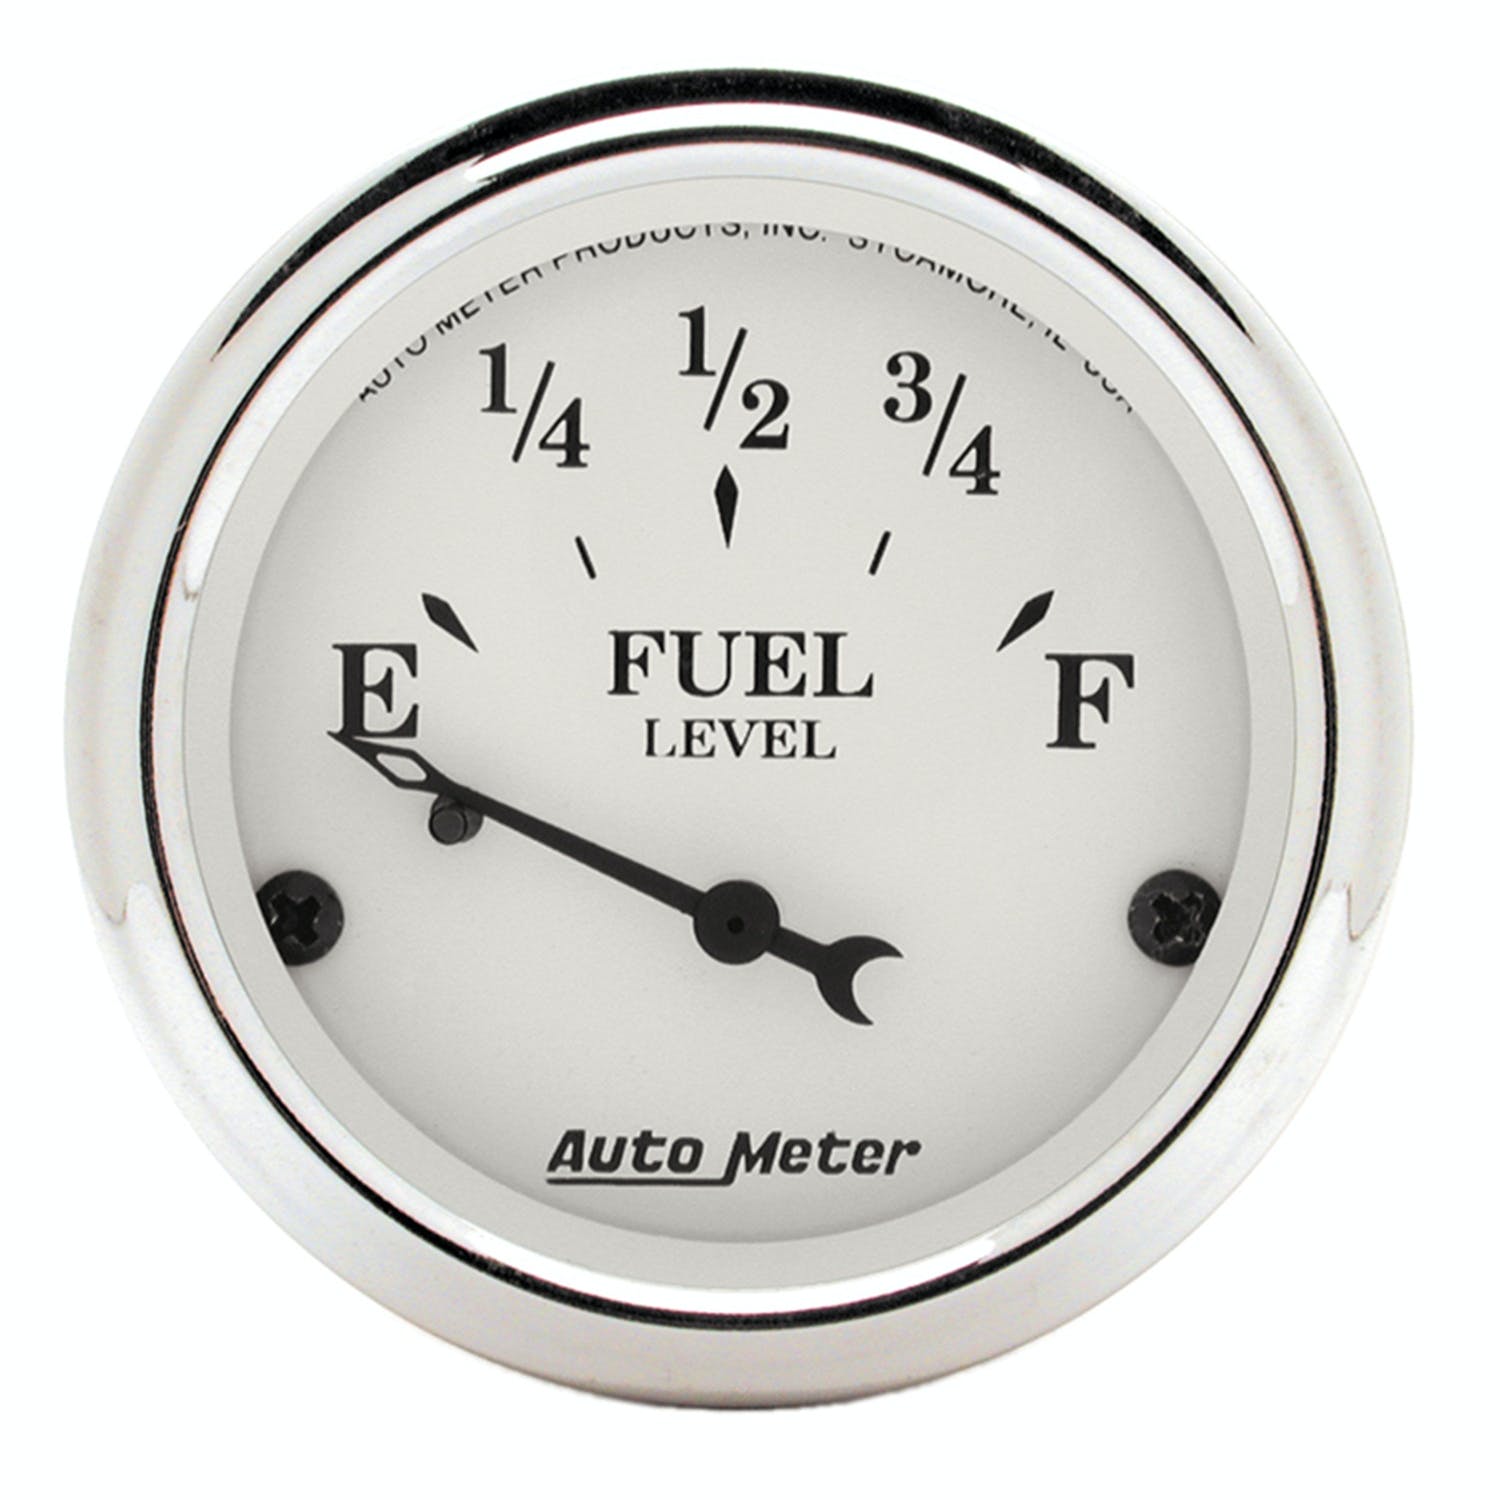 AutoMeter Products 1605 Fuel Level Gauge